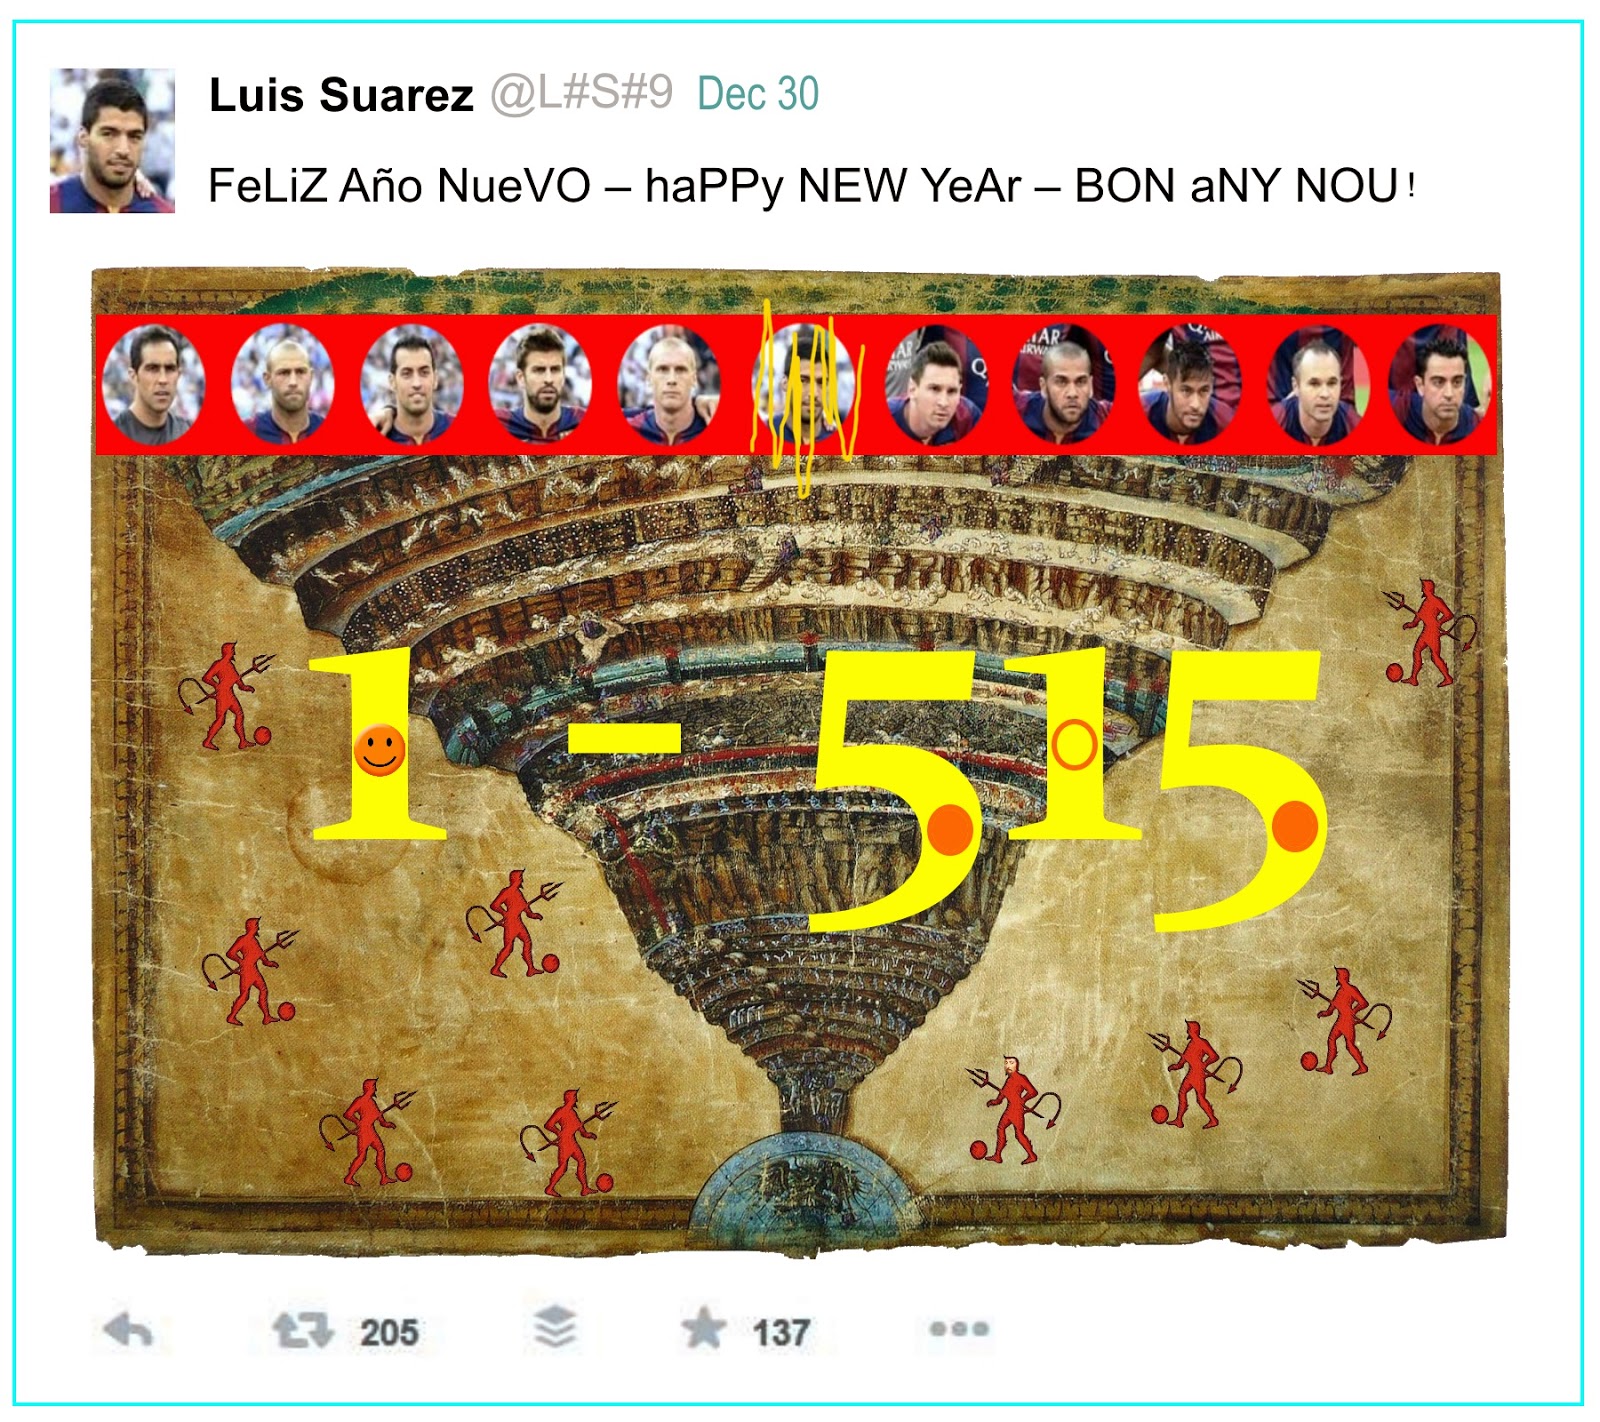 Felicitació del nou any 2015 de Luis Suárez.